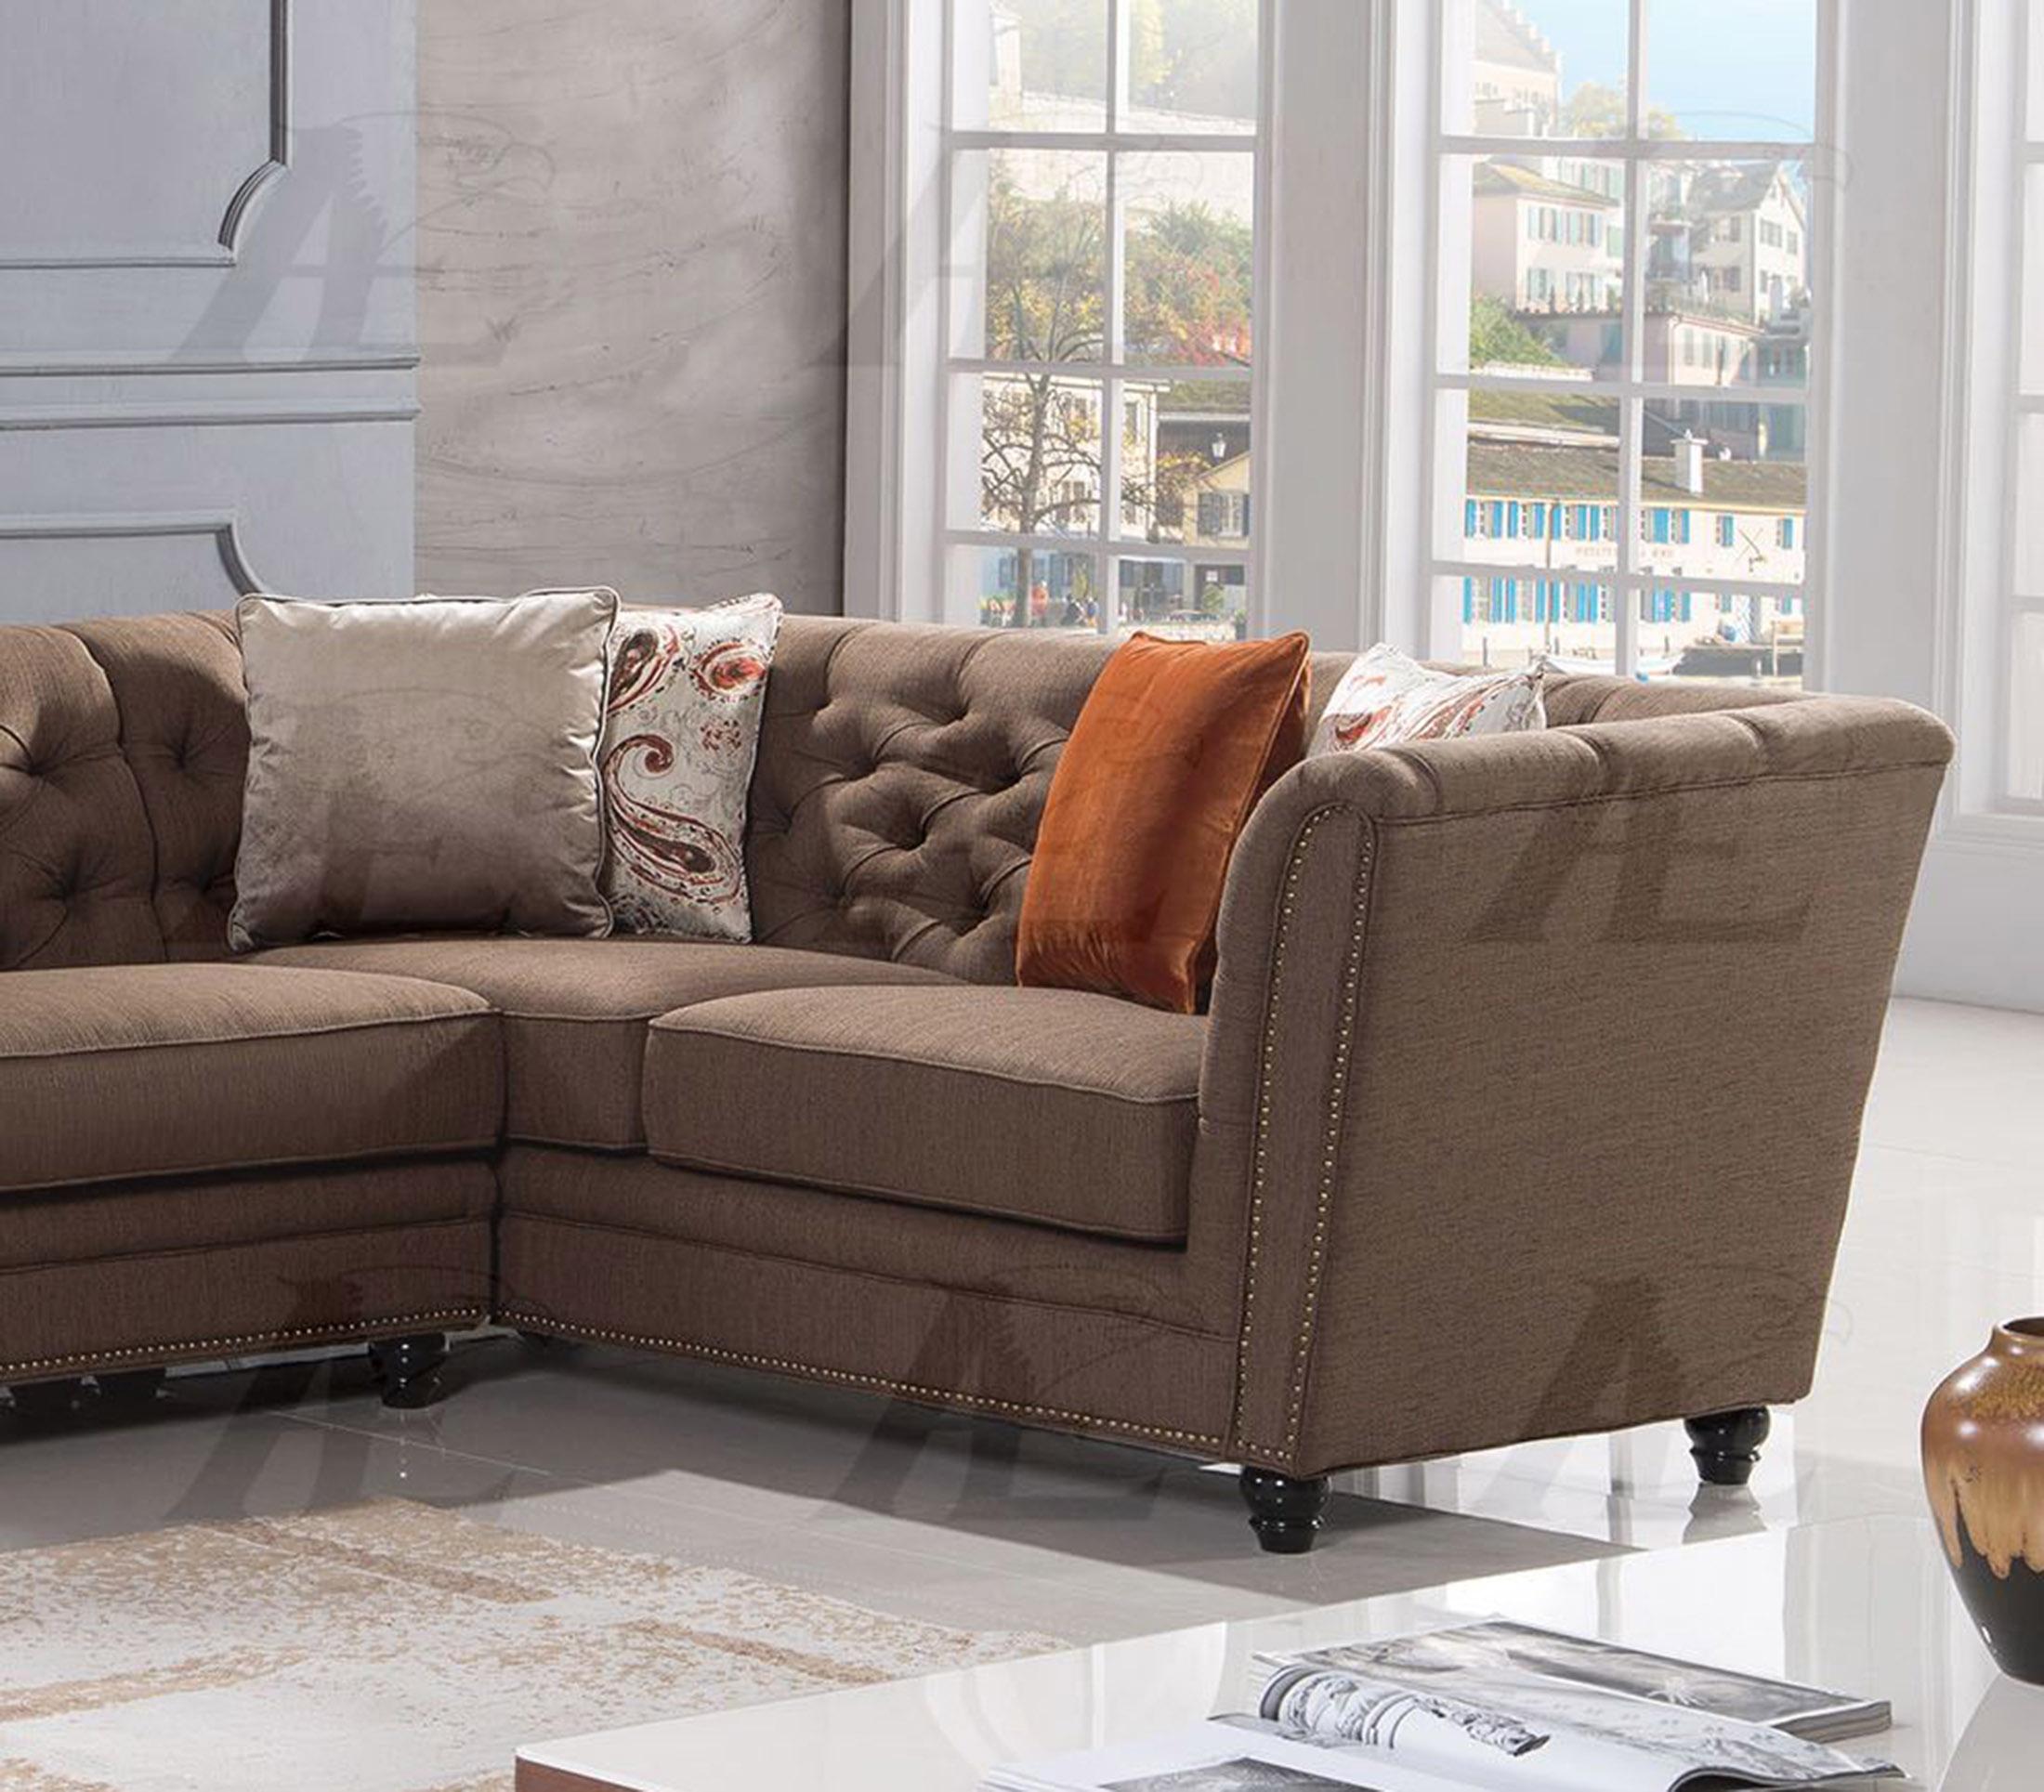 

    
American Eagle Furniture AE-L2219-BR Sectional Sofa Living Room Set Brown AE-L2219-BR Set-2 LHC
